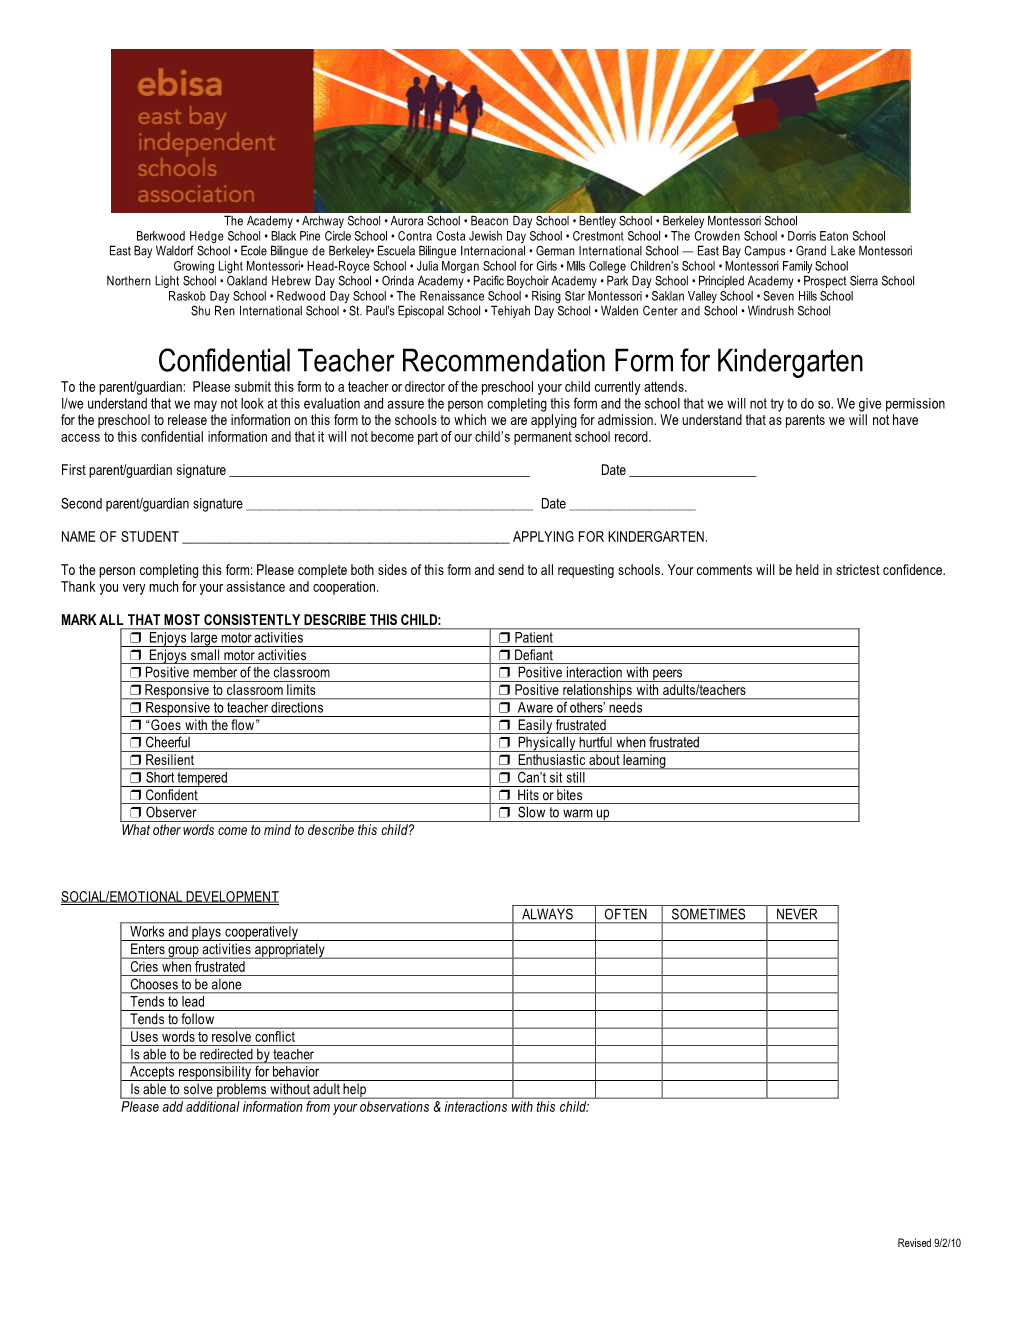 Confidential Teacher Recommendation Form For